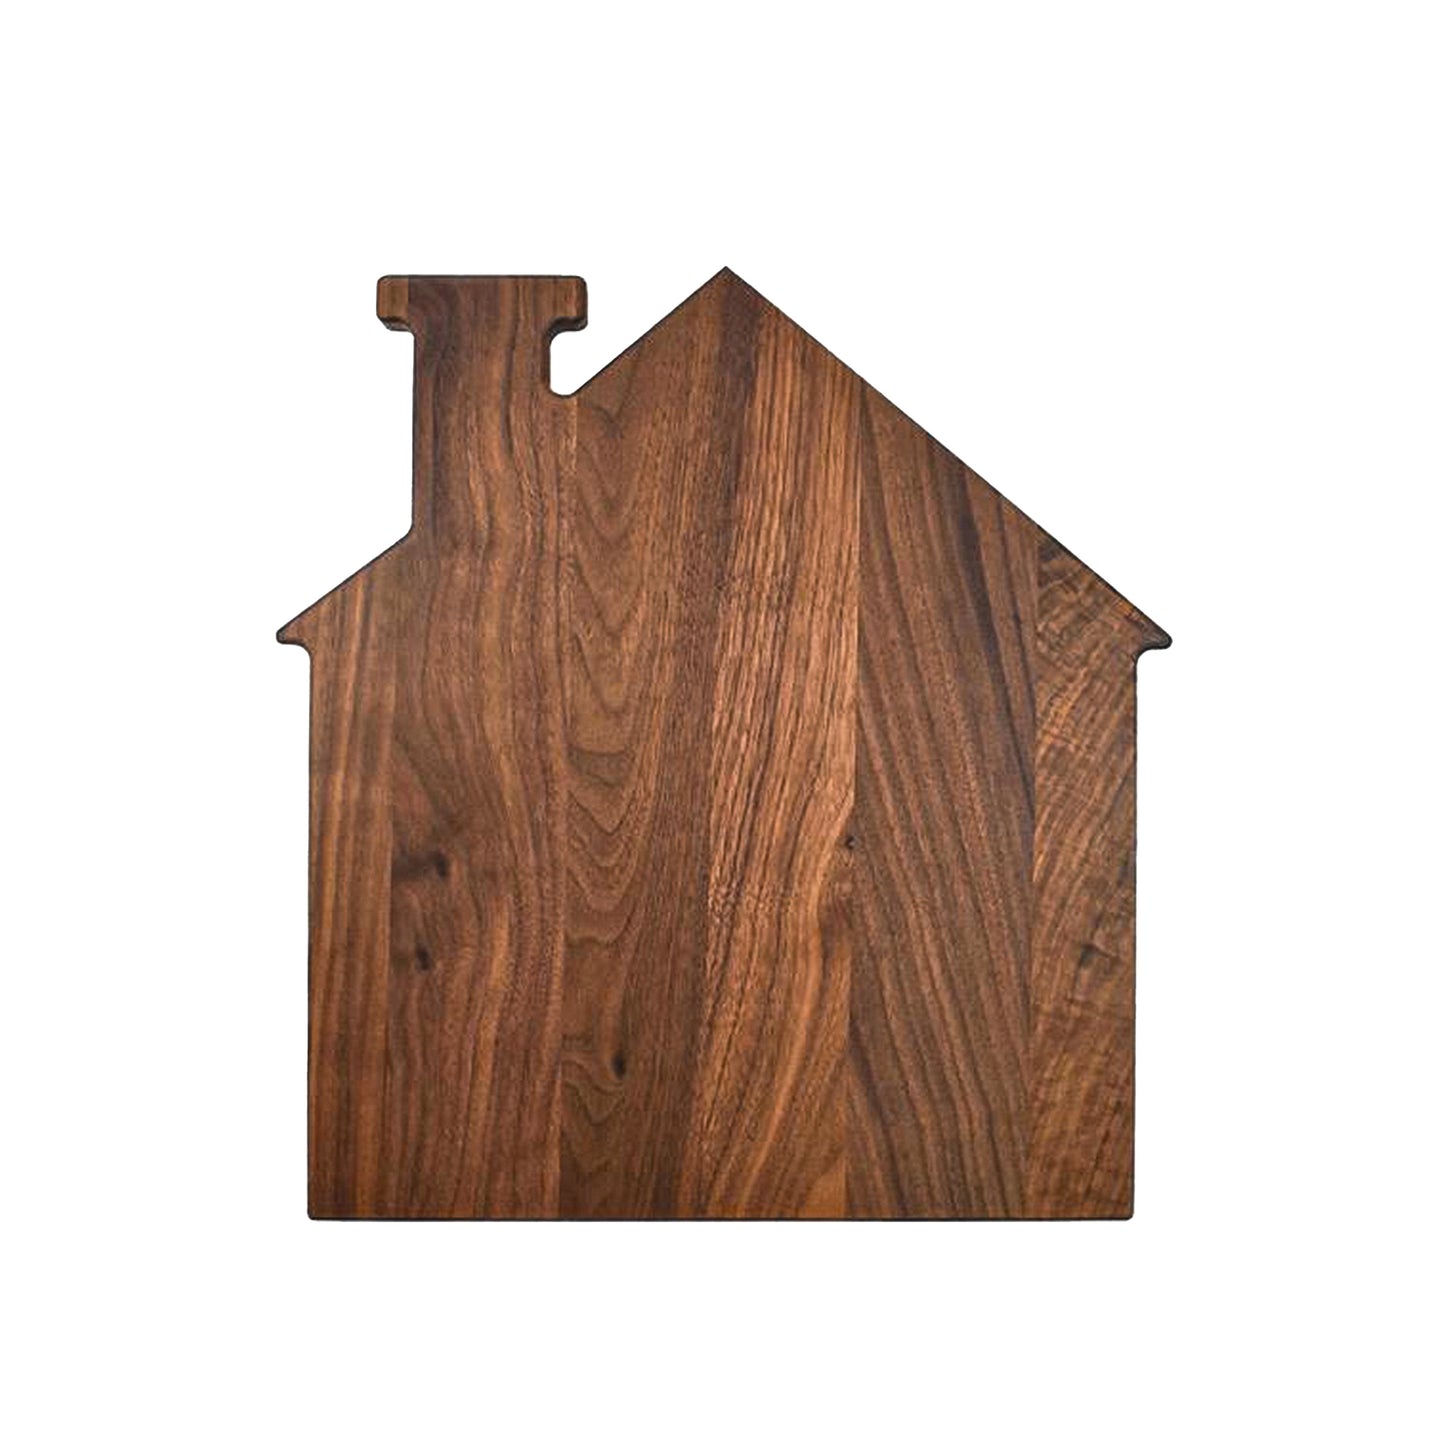 House Shaped Acacia Wood Board - 13" x 14"